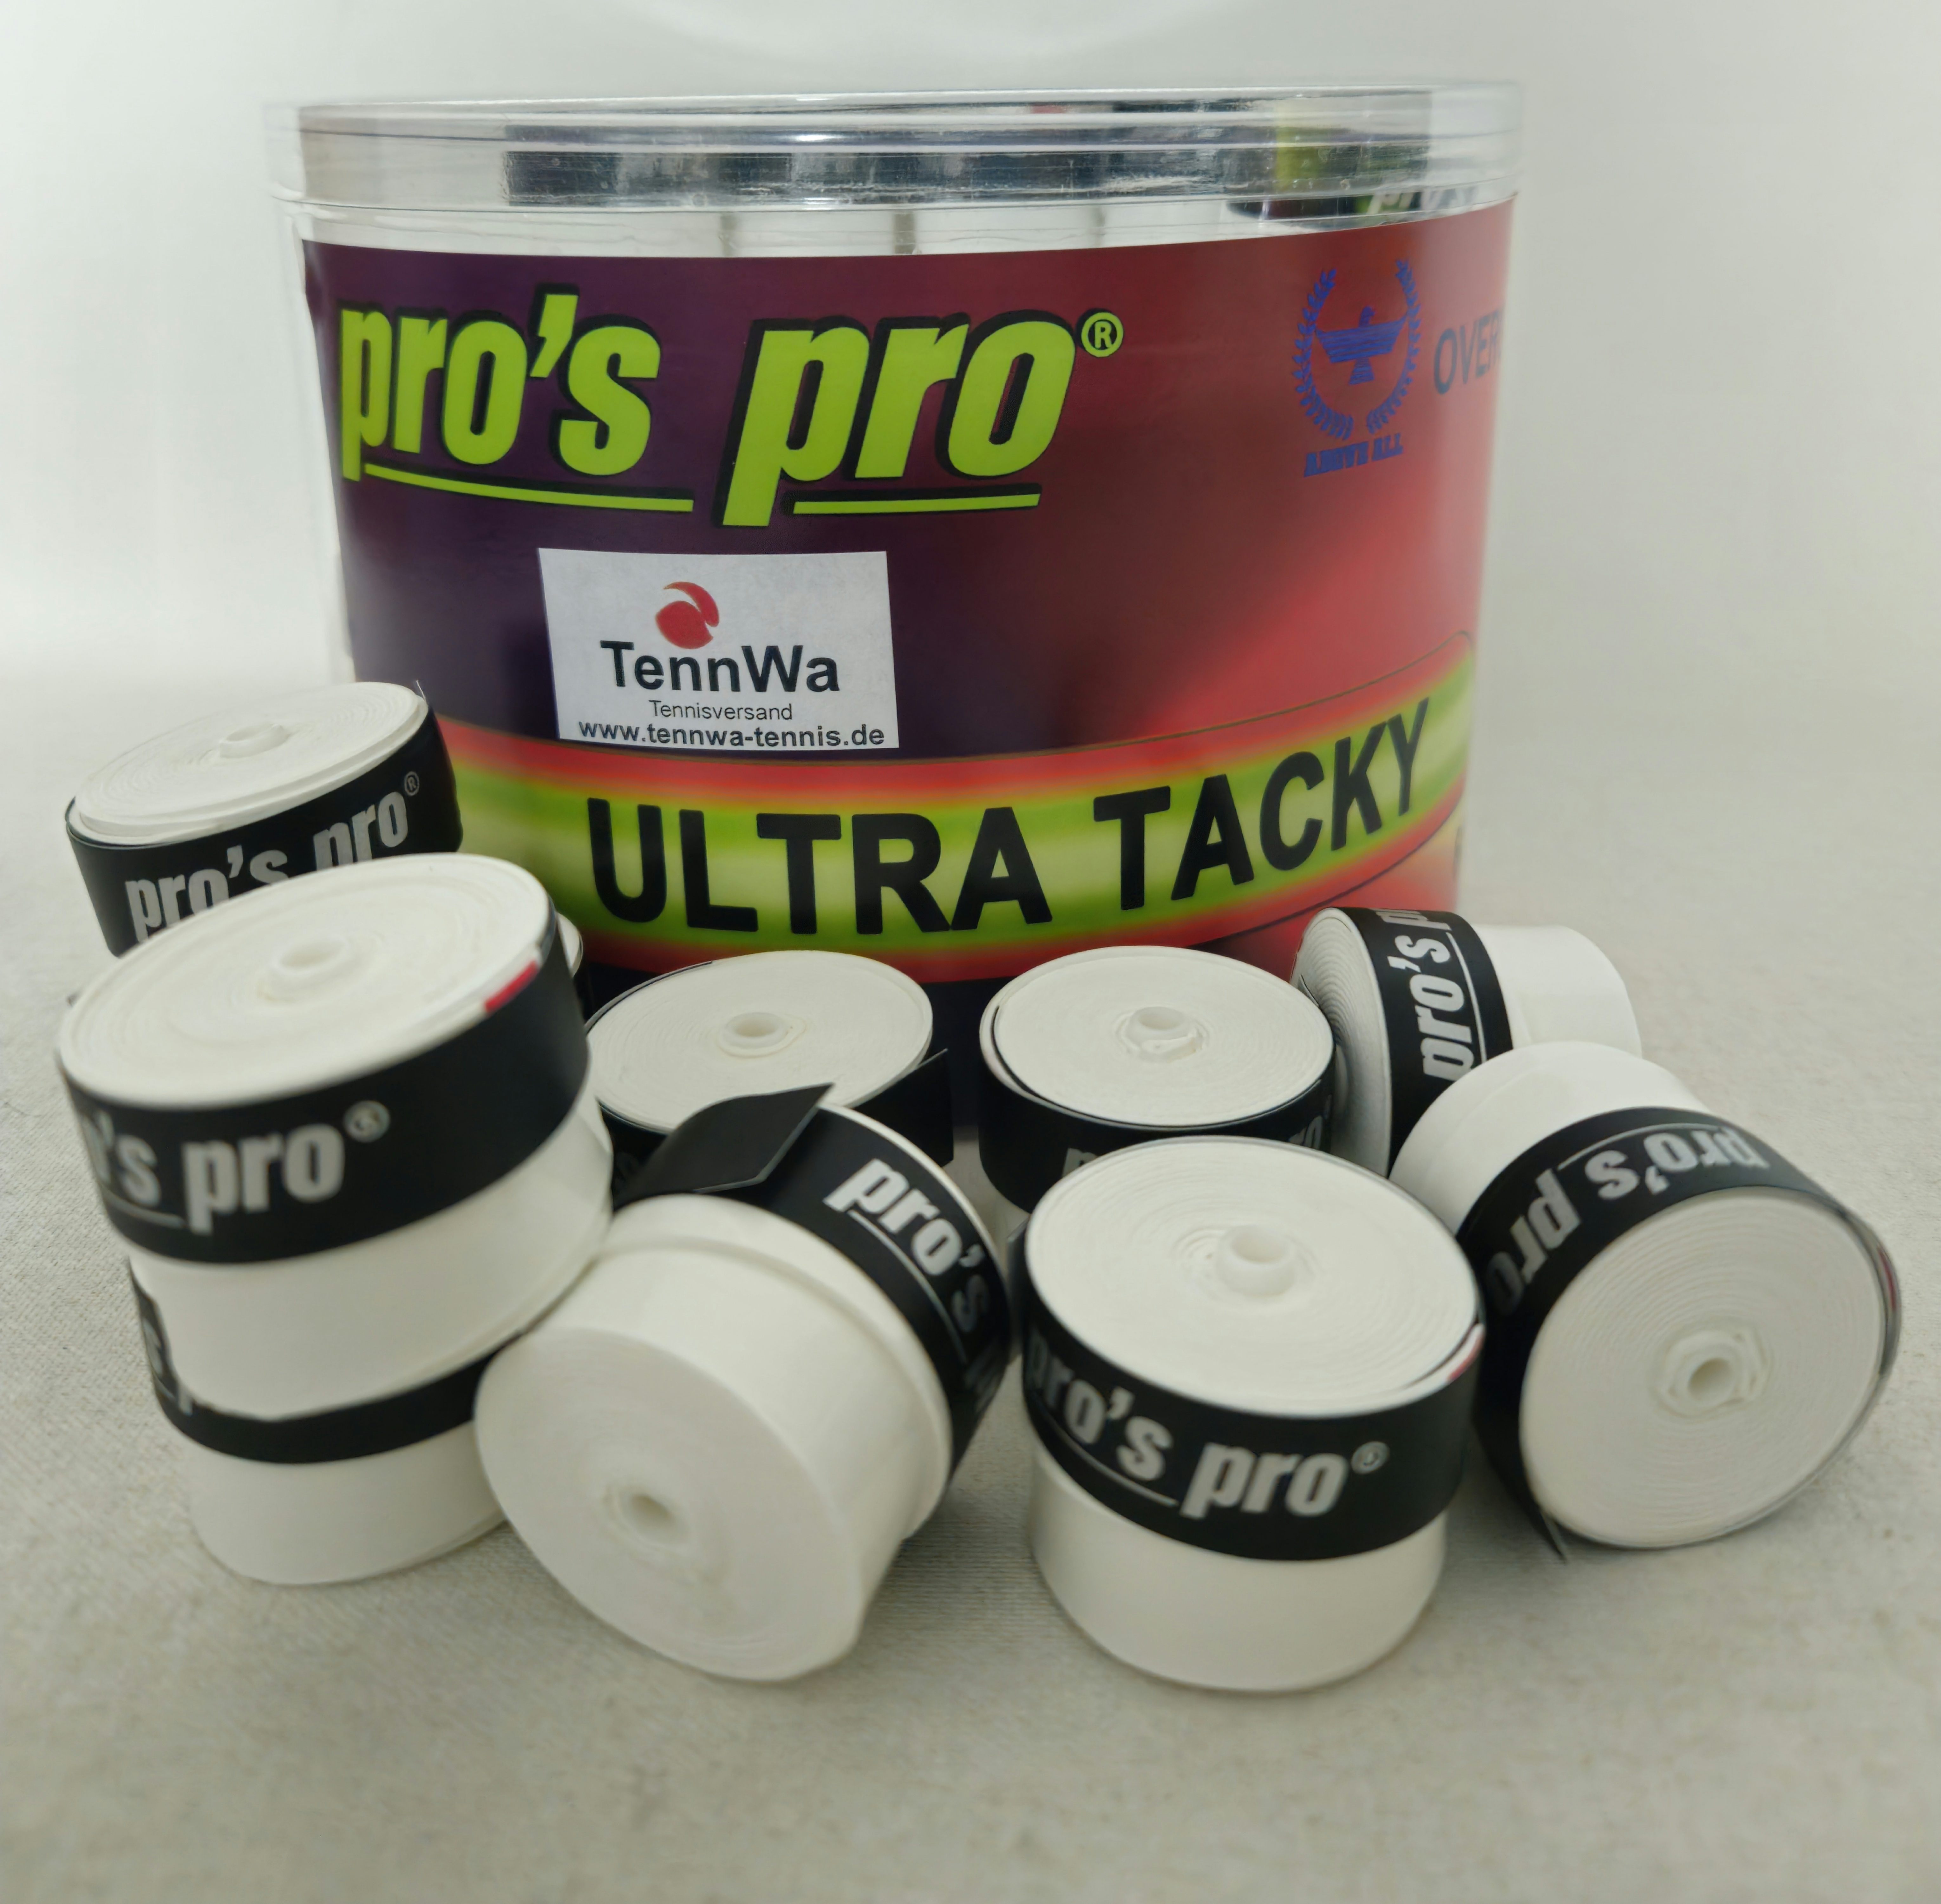 Pros Pro Ultra Tacky weiß, 0,7mm, 10 Stück